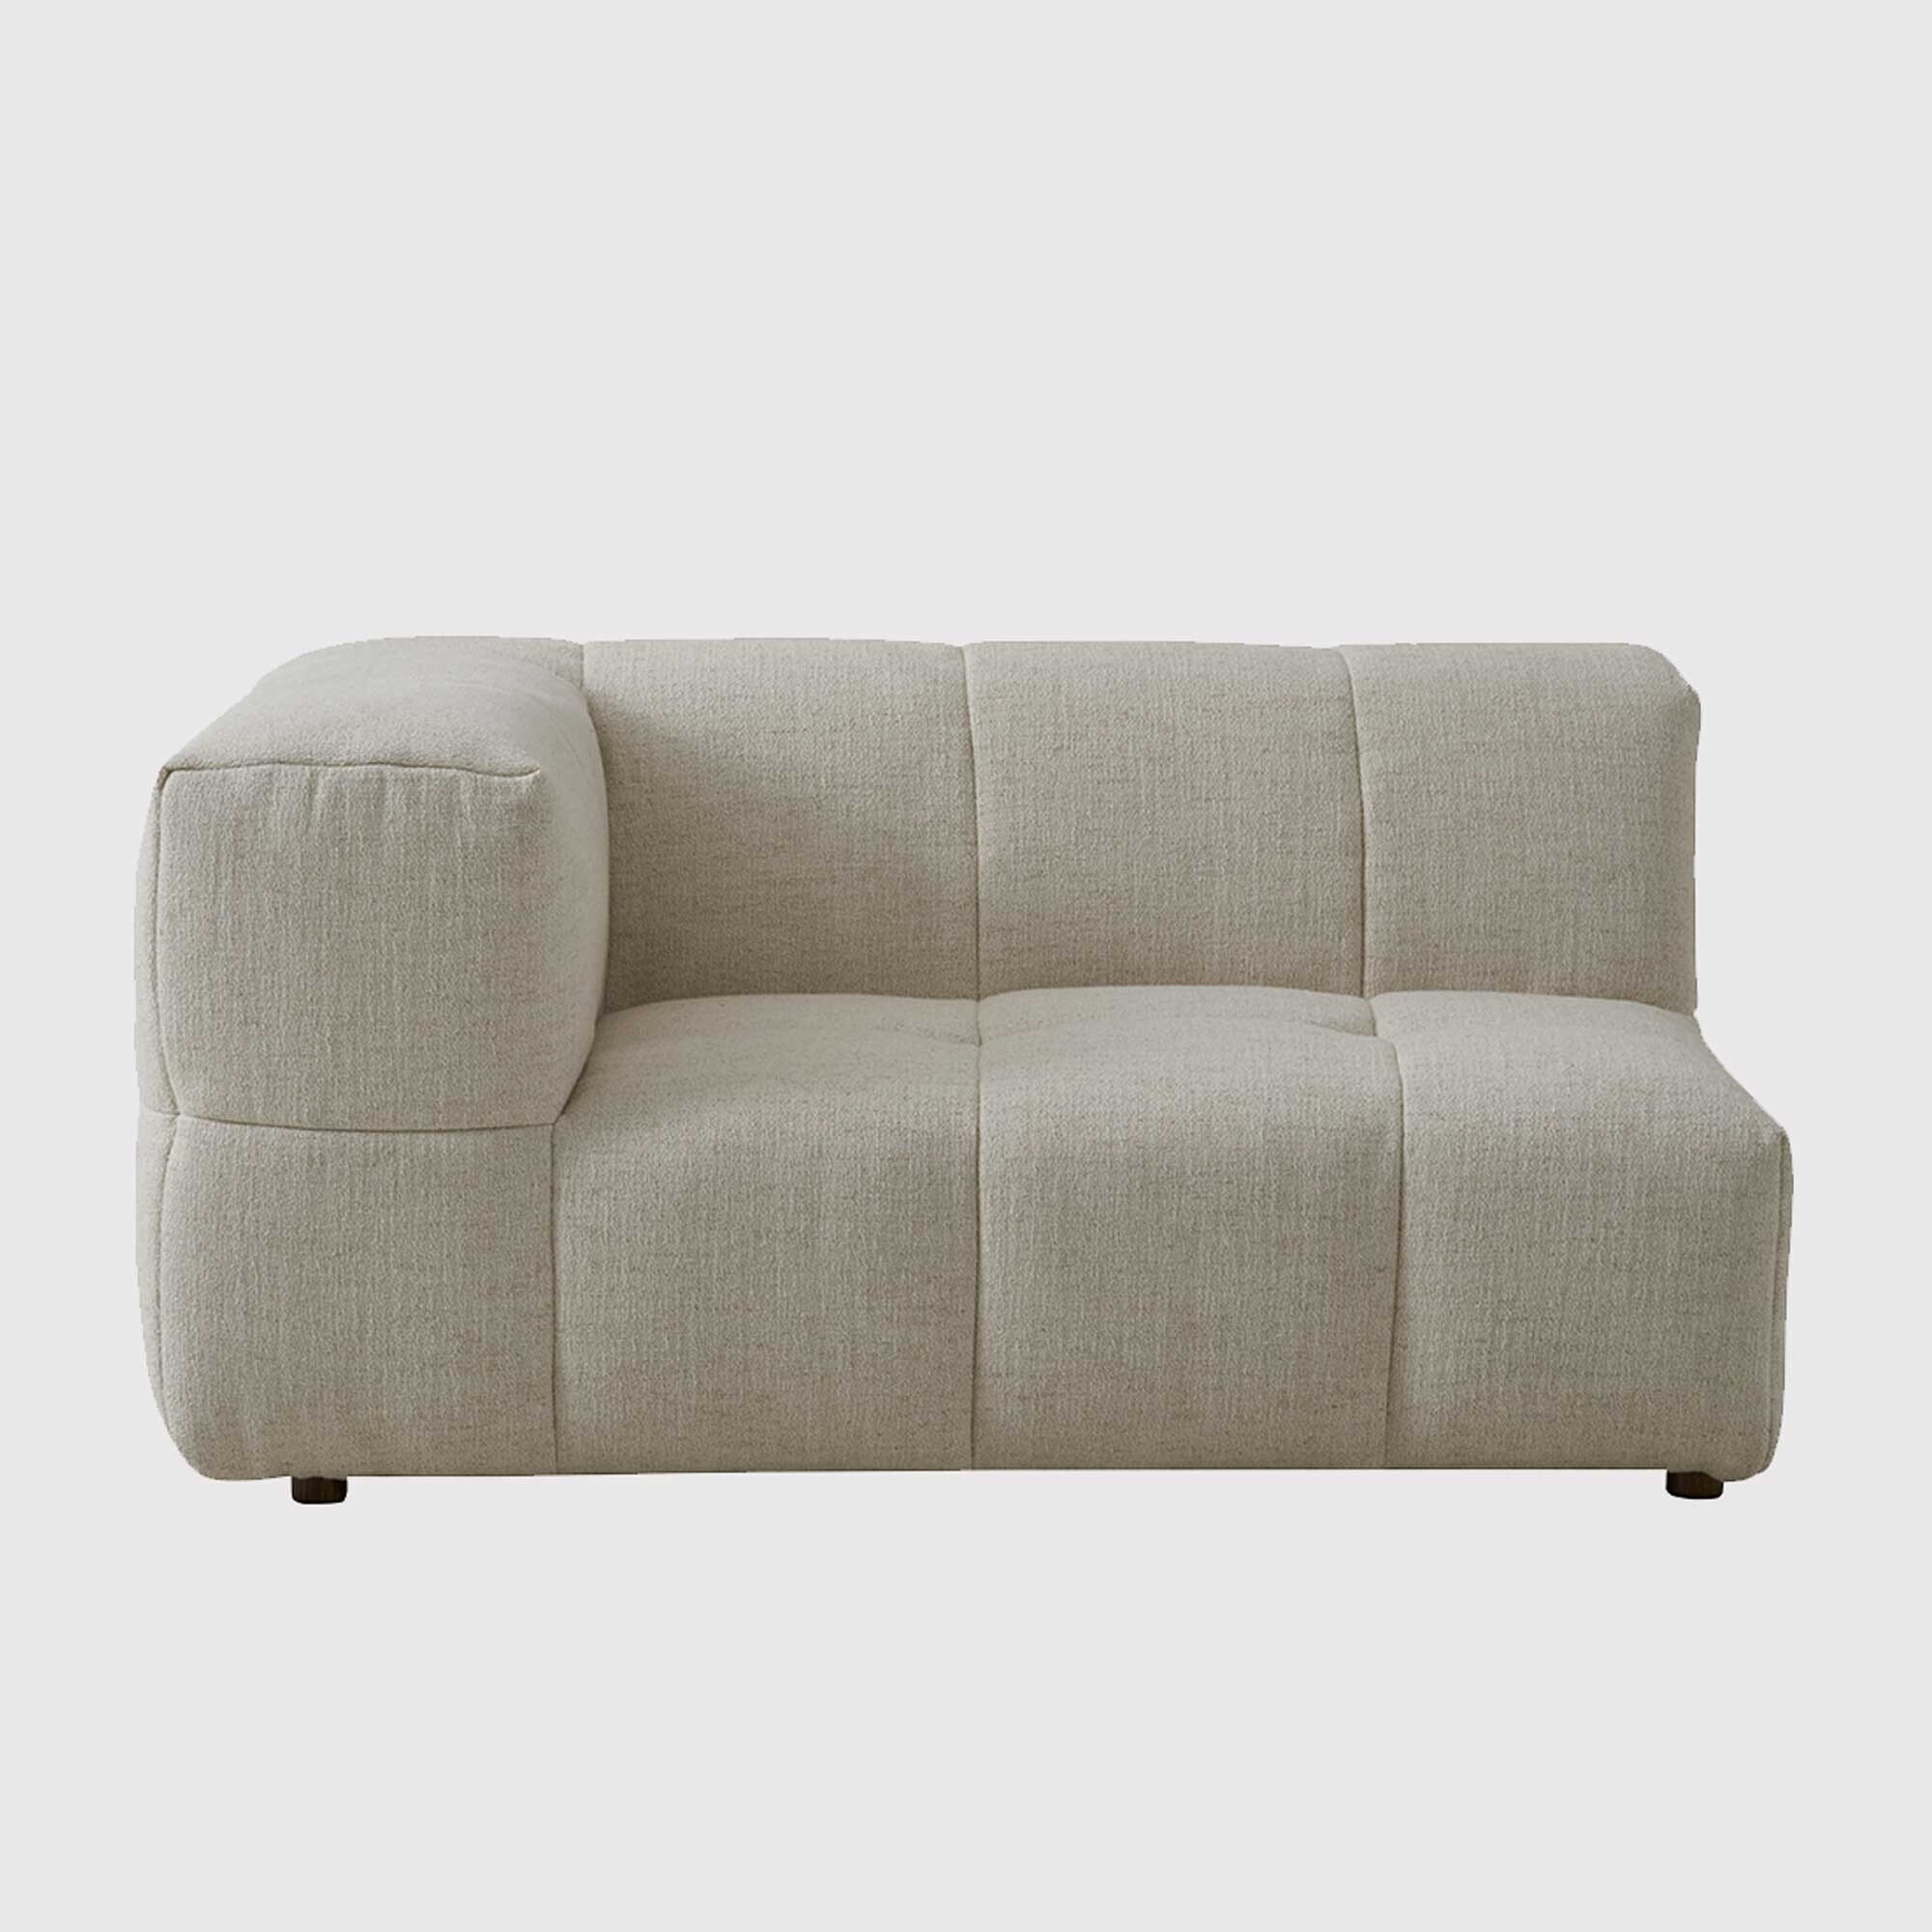 Plensa Section Lhf Modular Sofa, Neutral Fabric - Barker & Stonehouse - image 1